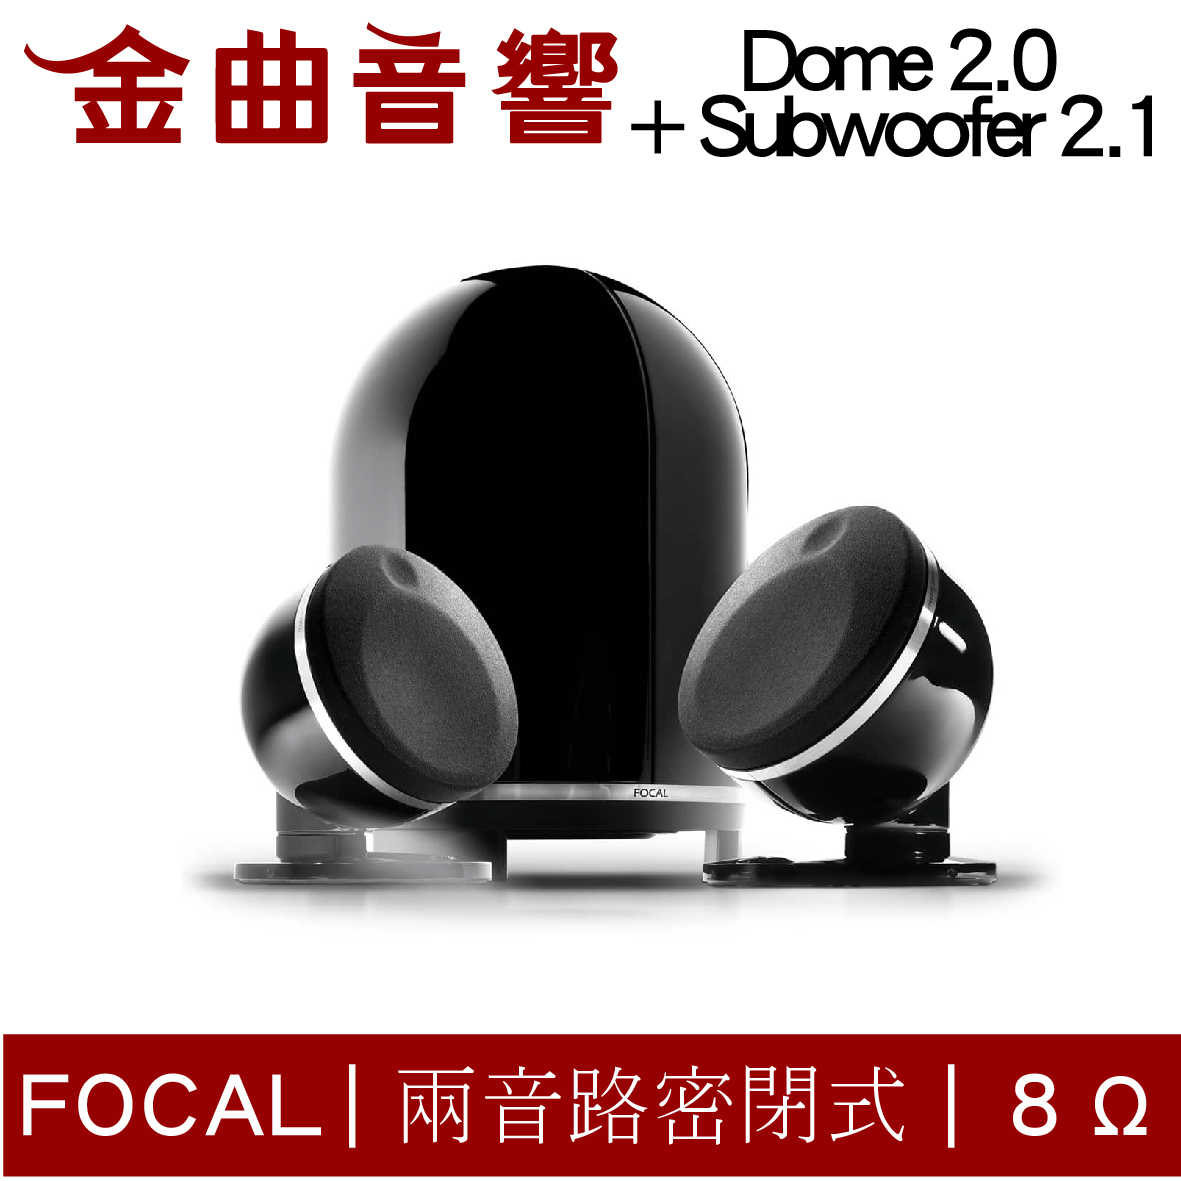 FOCAL Dome 2.0 + Subwoofer 2.1 聲道 時尚 鋼烤 多種組合 喇叭 音響 | 金曲音響